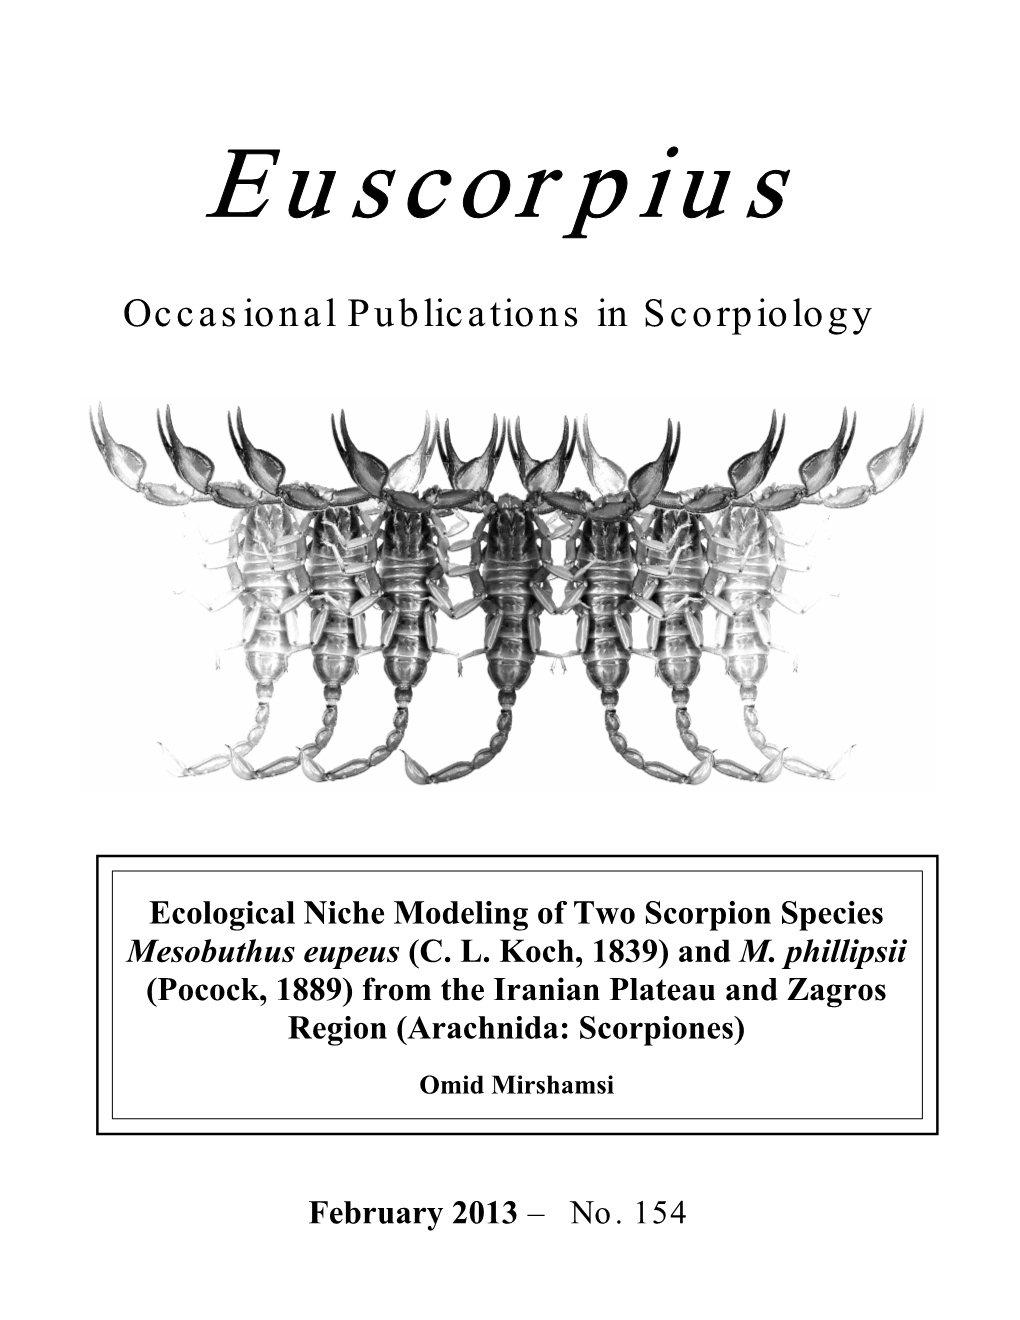 Ecological Niche Modeling of Two Scorpion Species Mesobuthus Eupeus (C